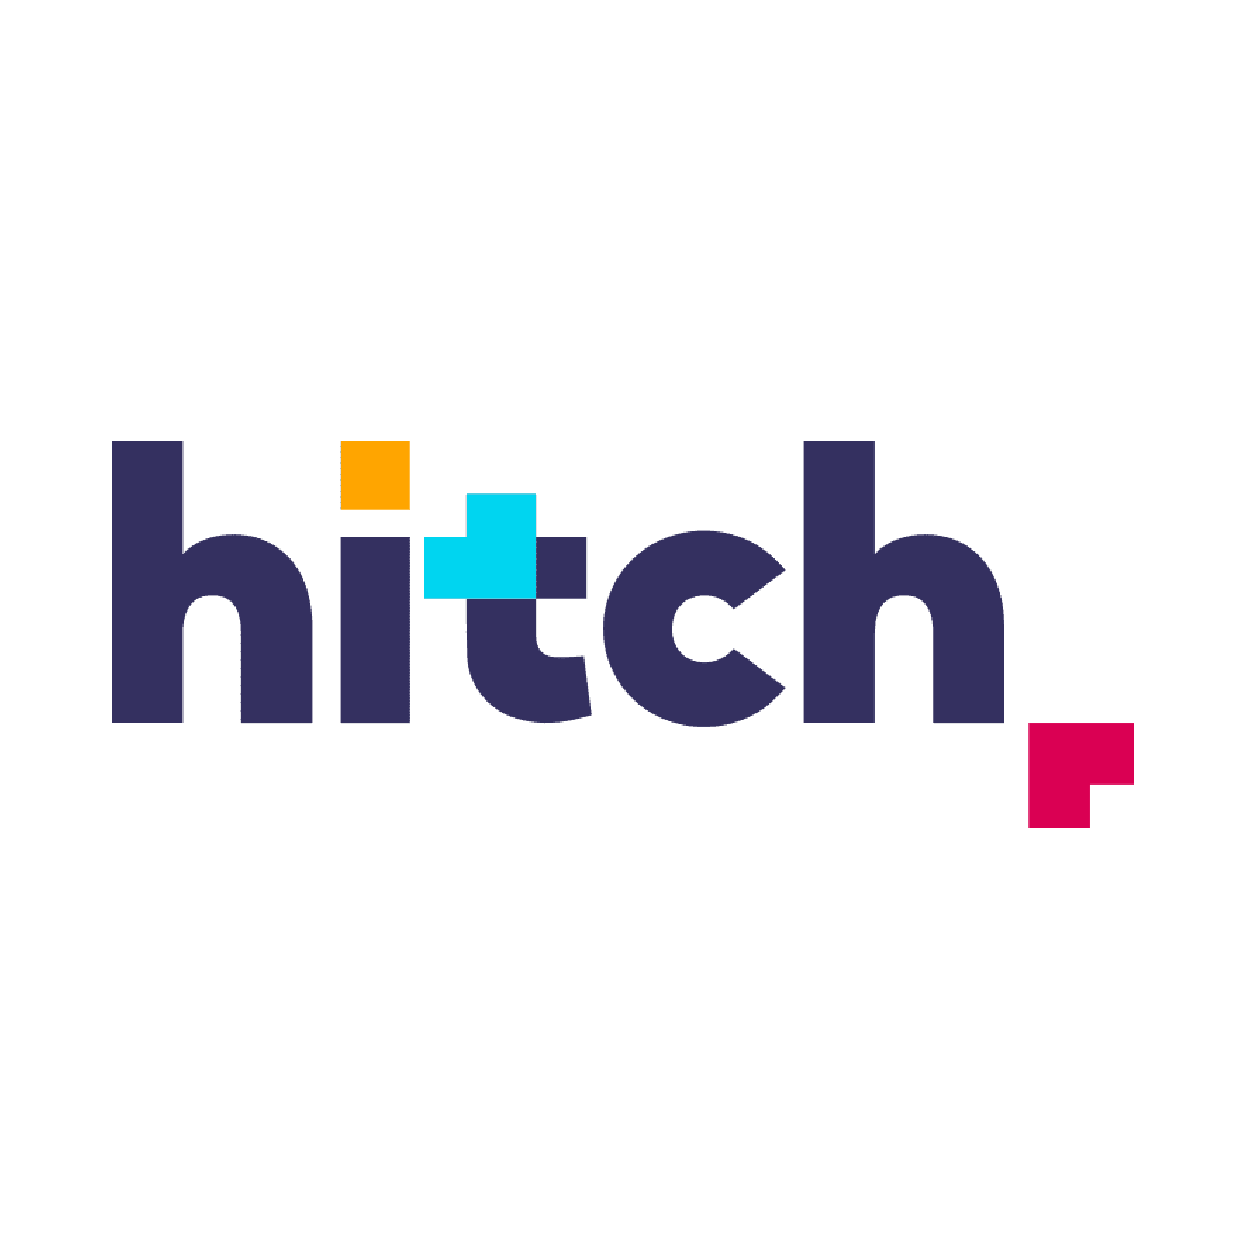 hitch